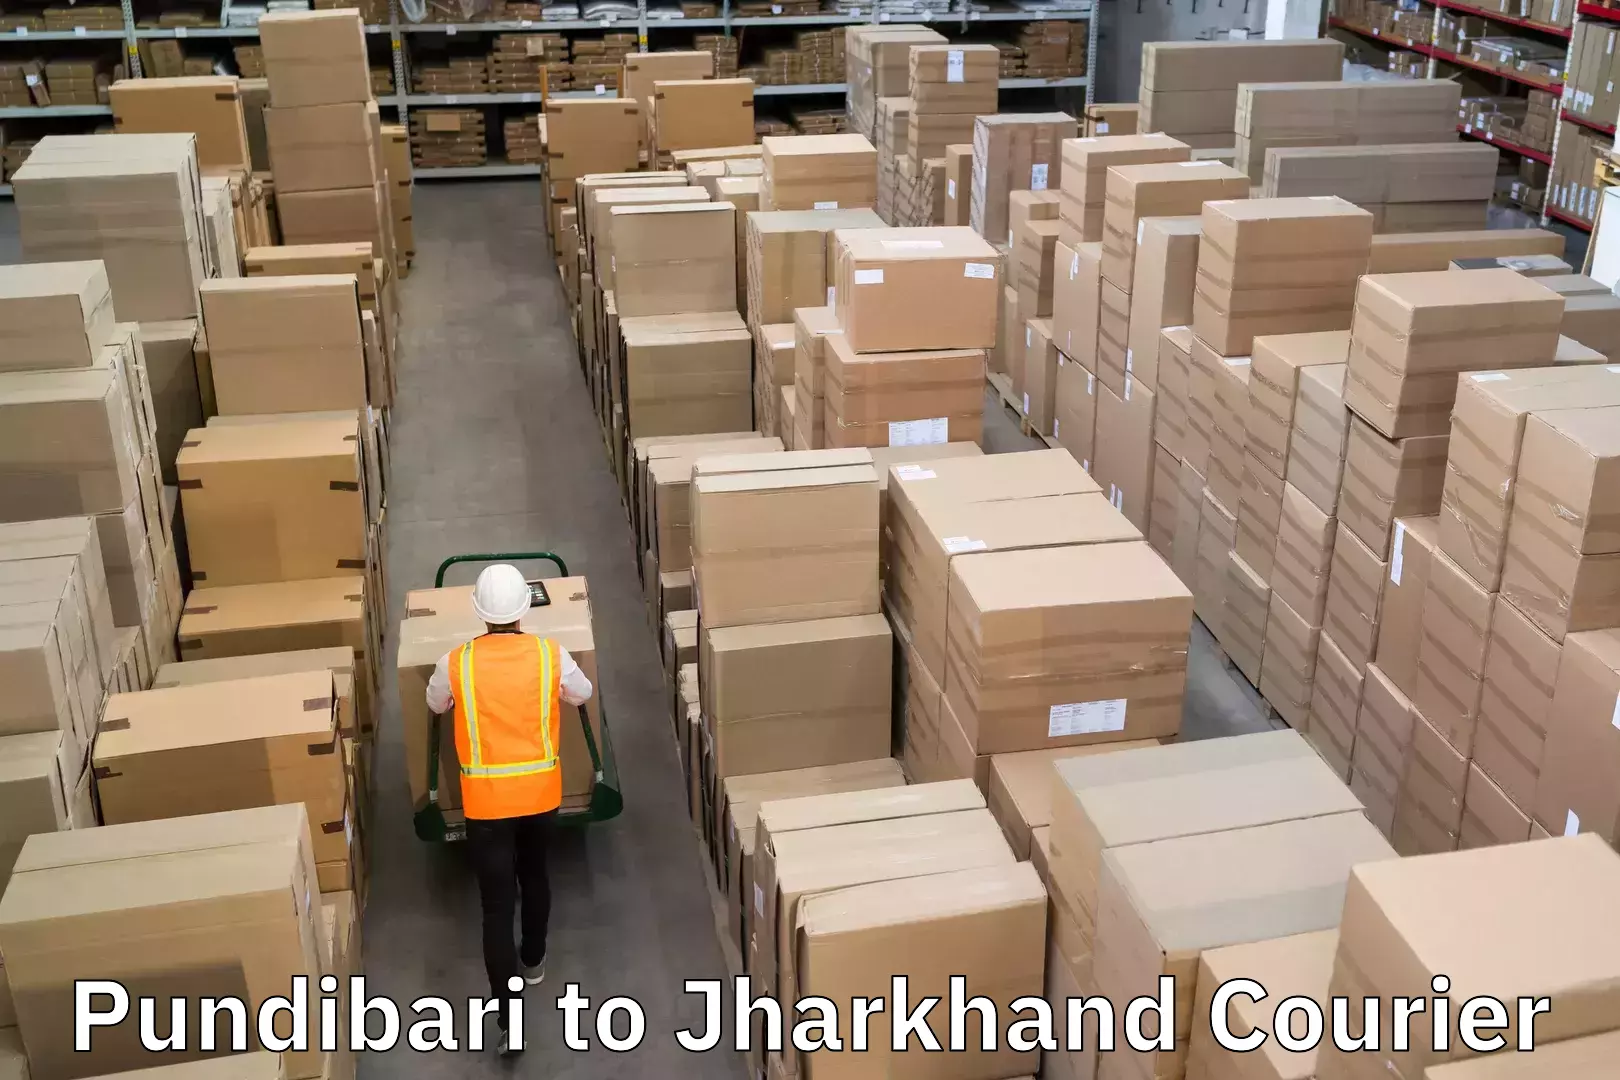 Courier service innovation Pundibari to Jharkhand